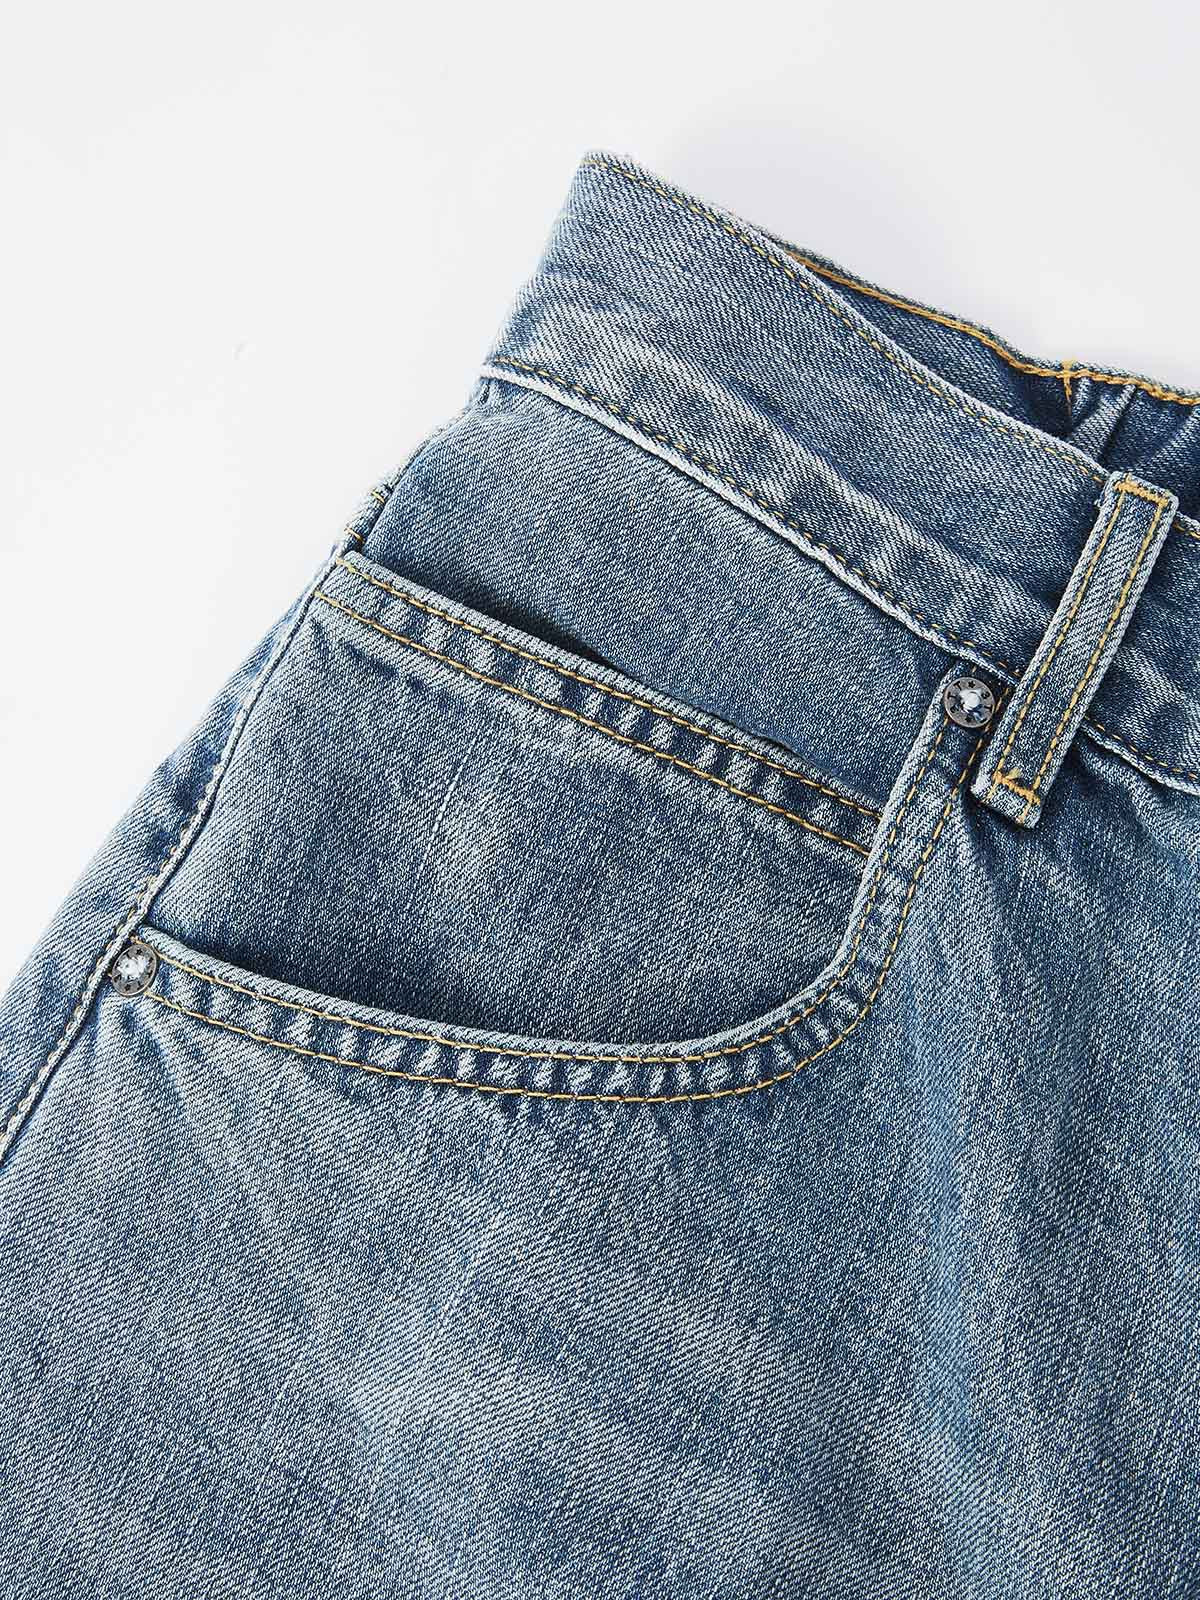 OBSTACLES & DANGERS©Noissey Rose Patchwork Denim Jeans